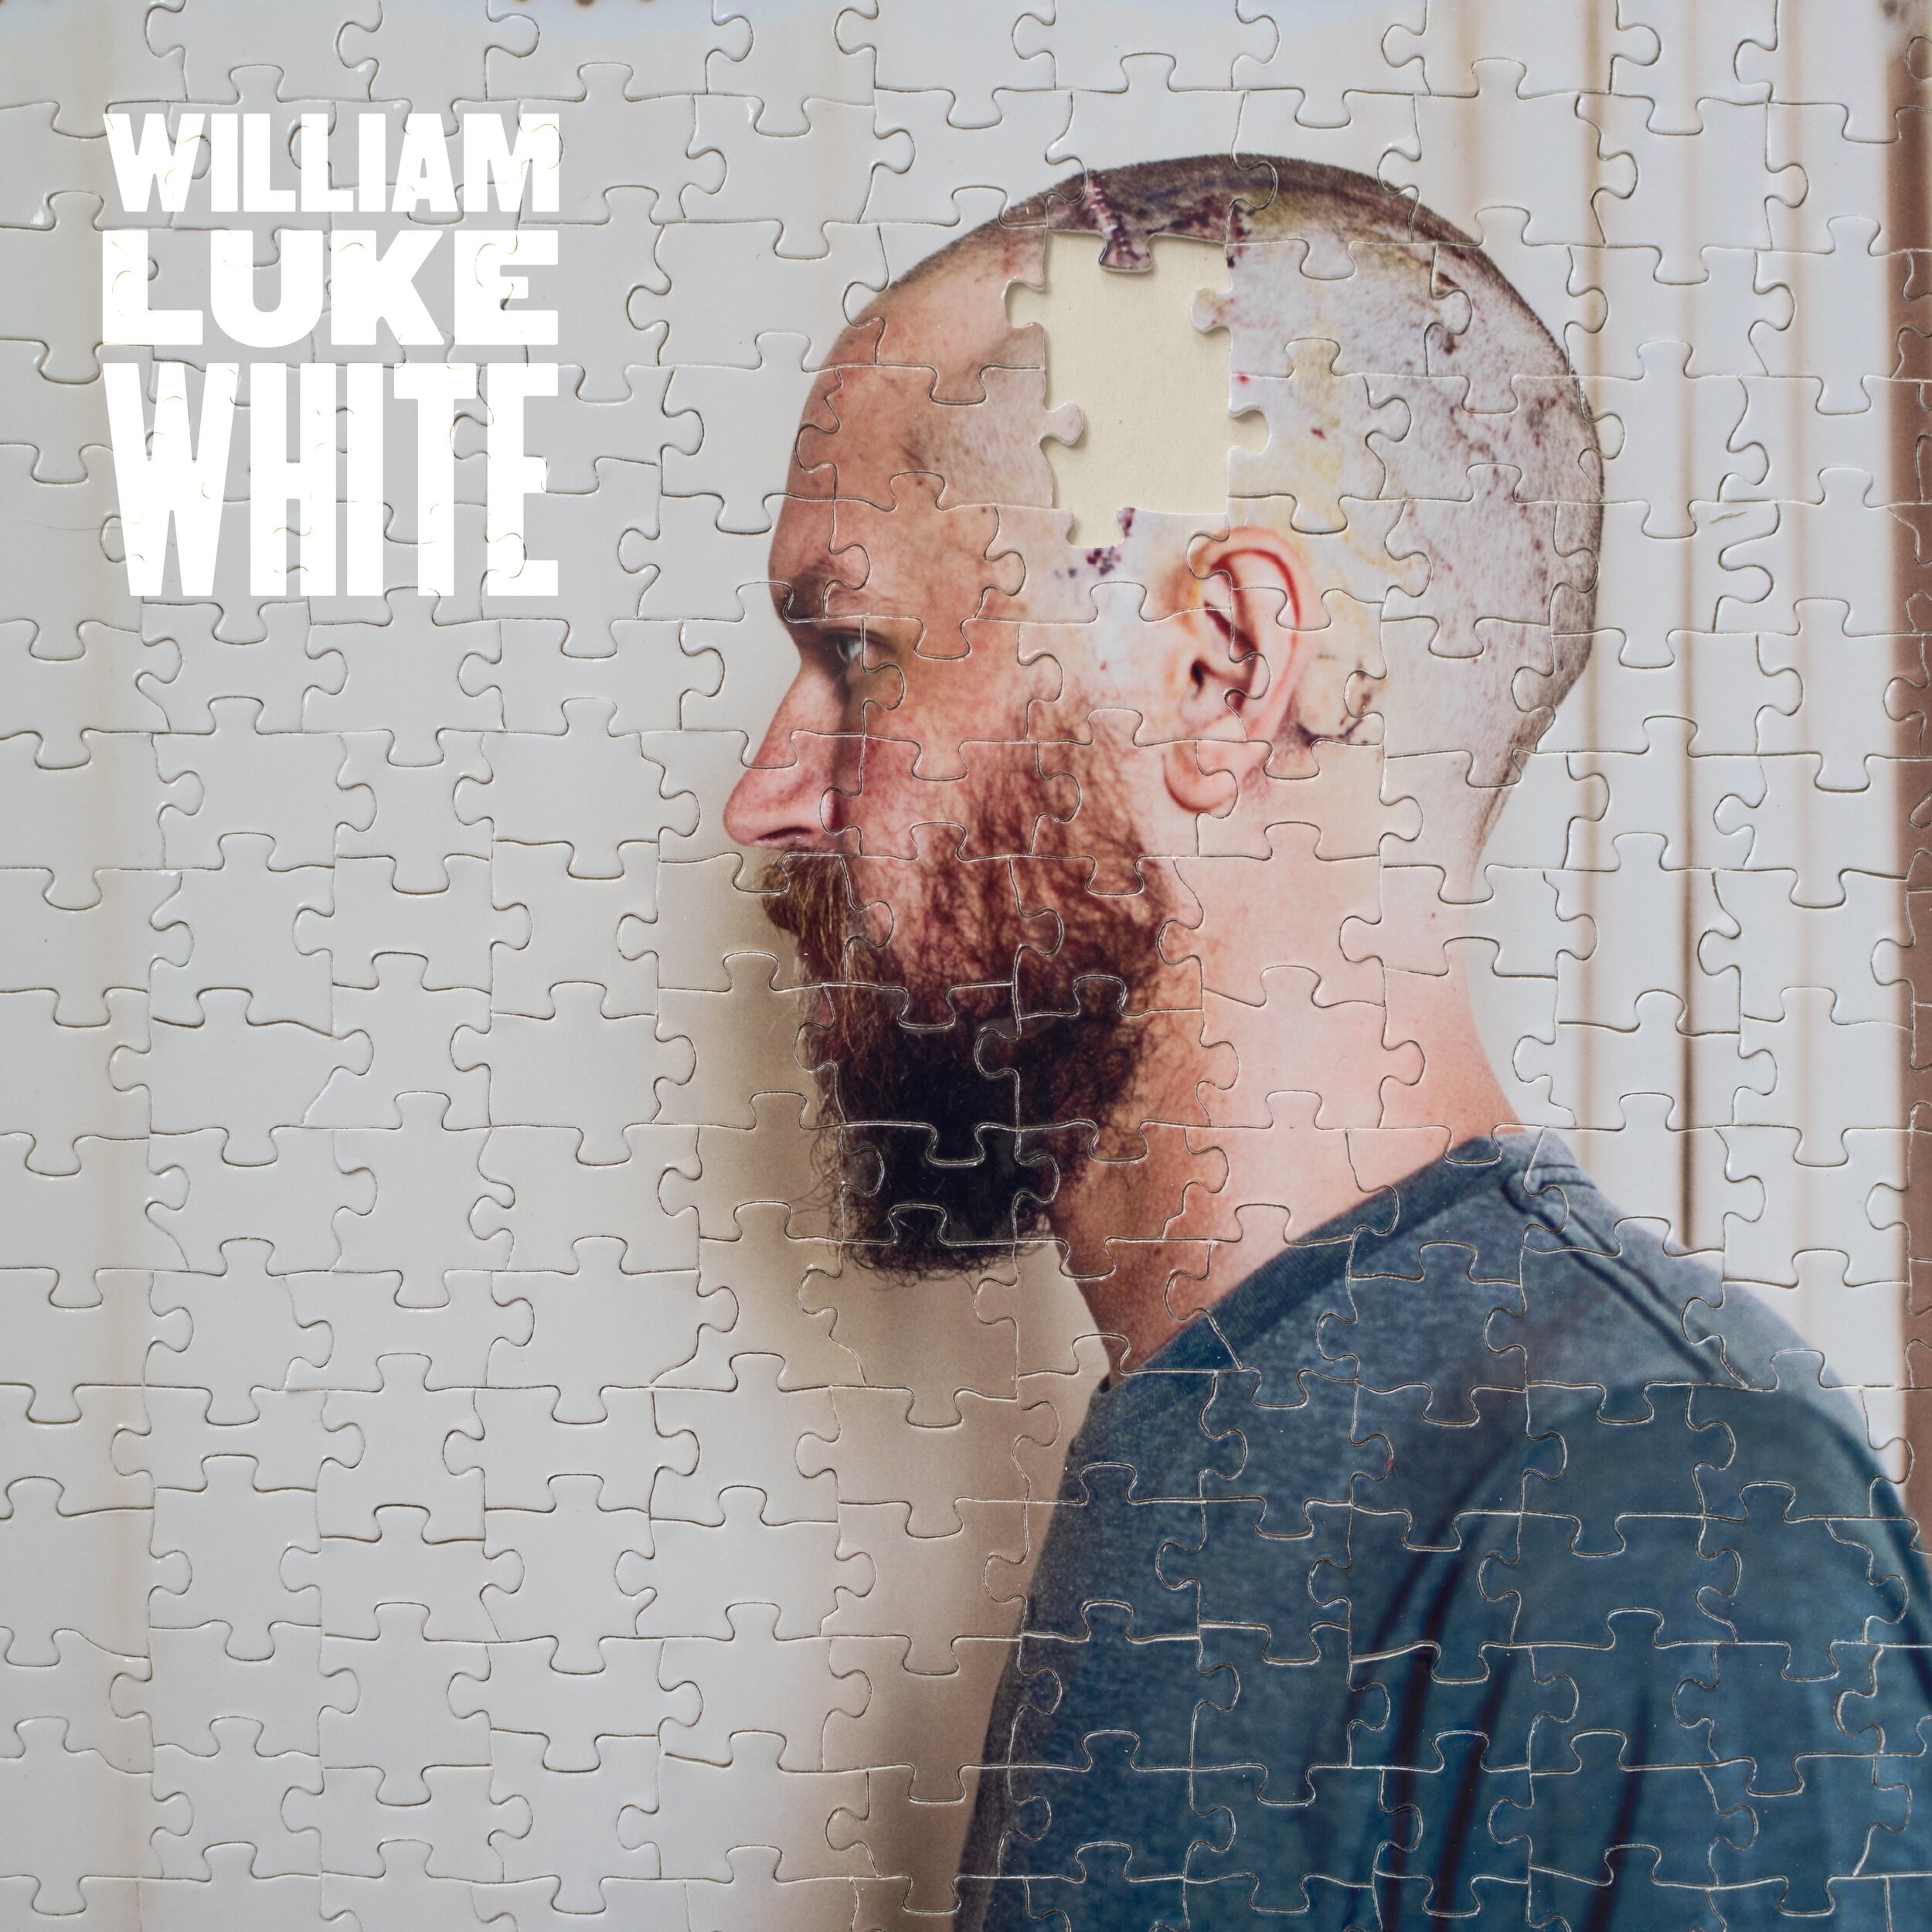 William Luke White